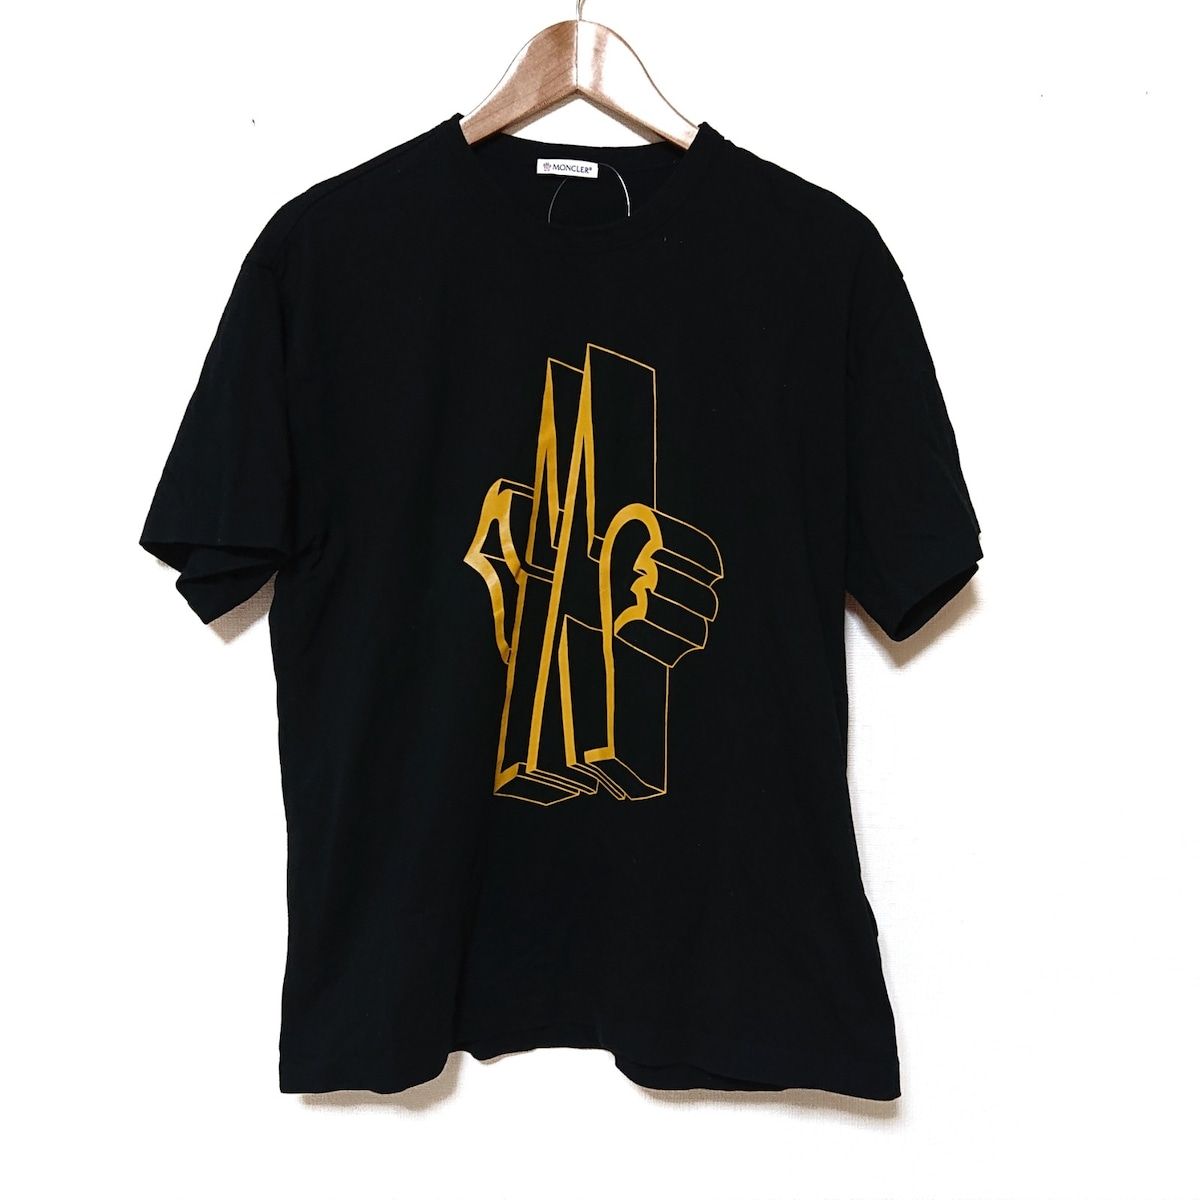 MONCLER(モンクレール) 半袖Tシャツ サイズL メンズ - 黒×イエロー クルーネック - メルカリ